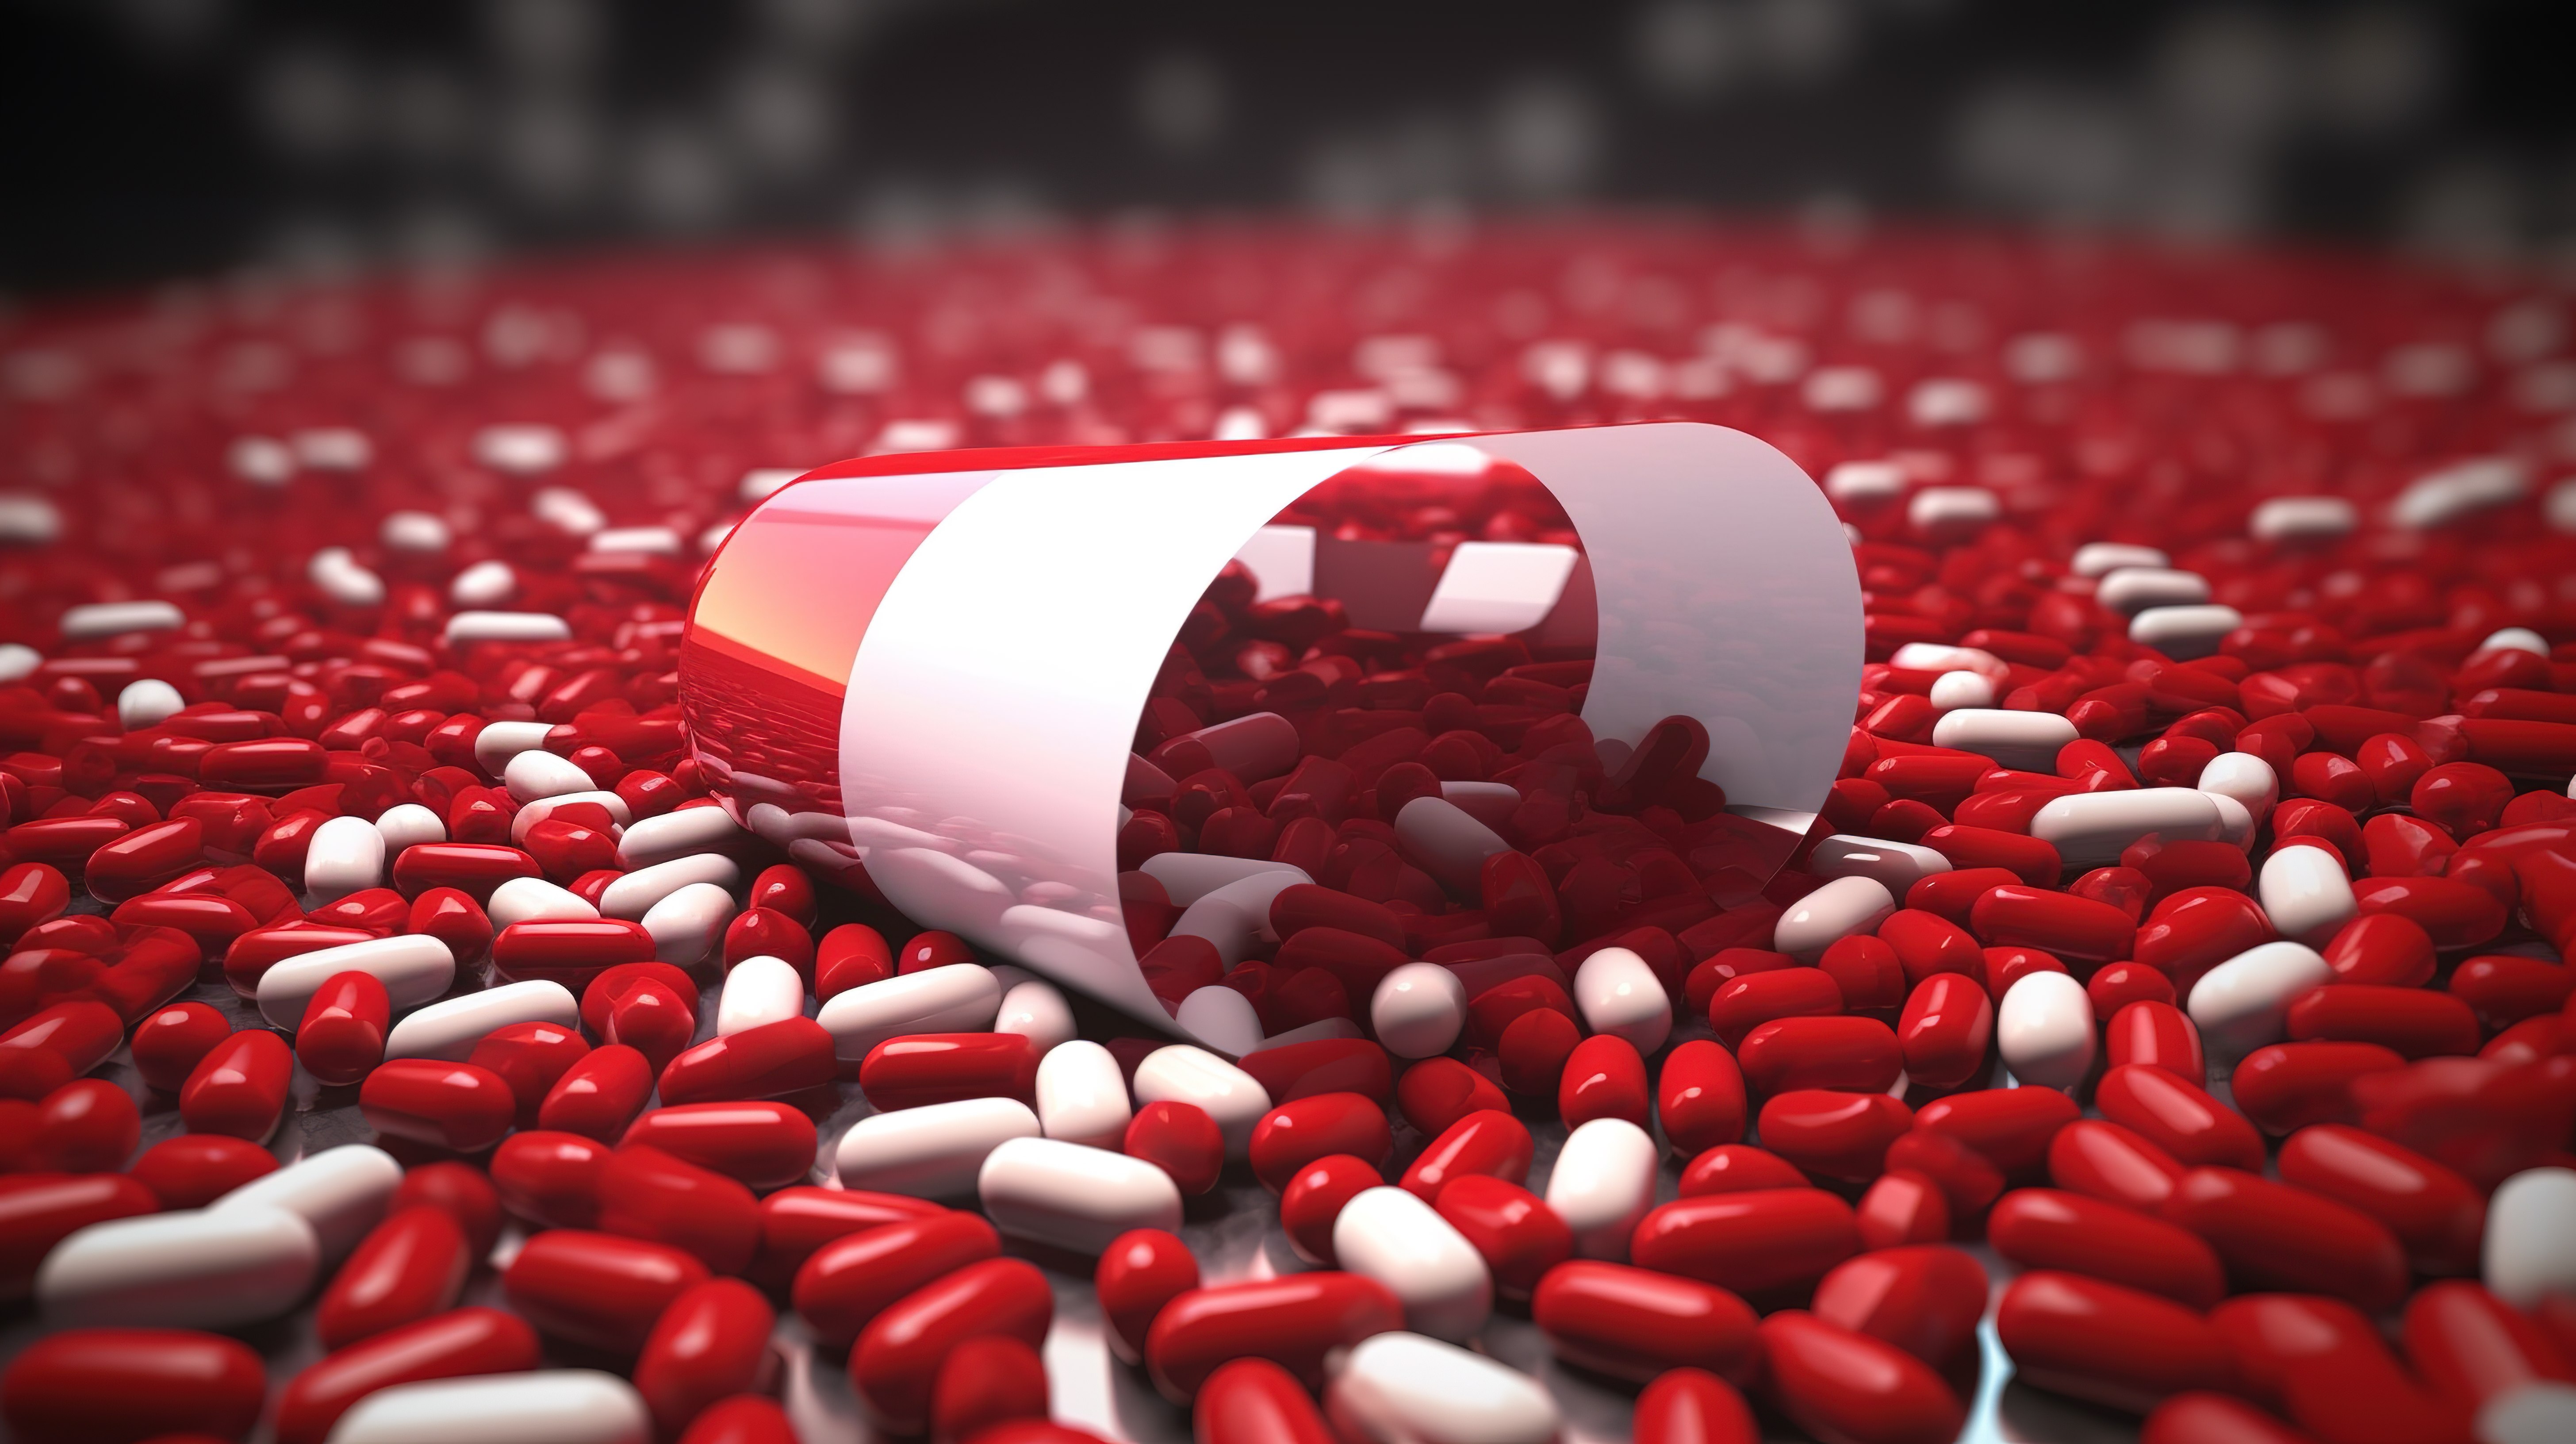 3D 渲染显示带有深红色箭头形颗粒的红色和白色药丸胶囊的插图图片